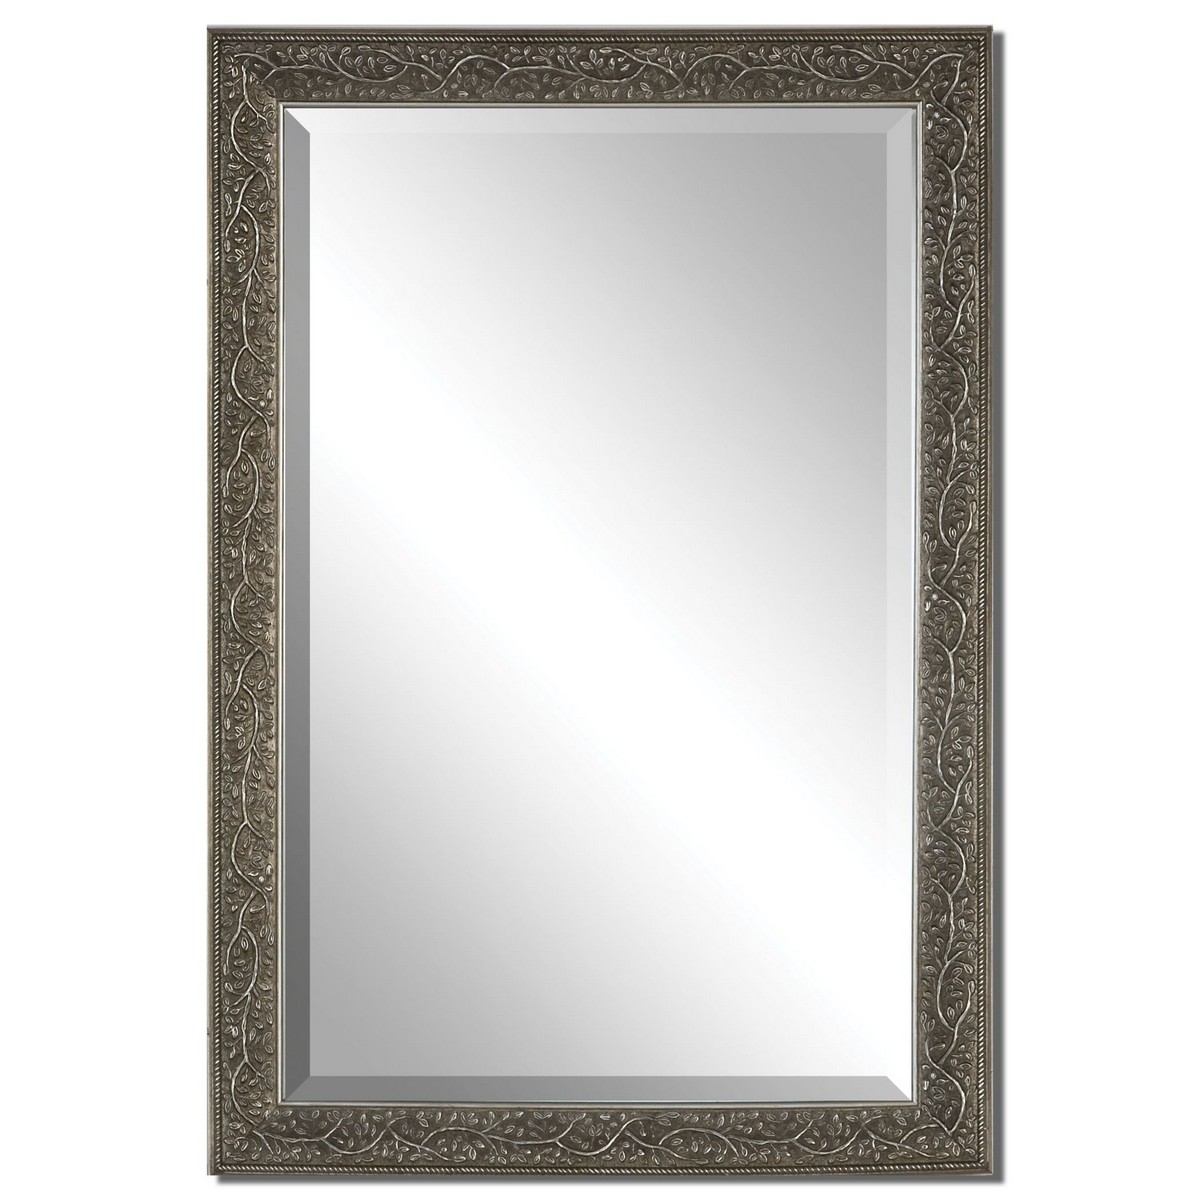 Uttermost Clematis Aged Silver Mirror